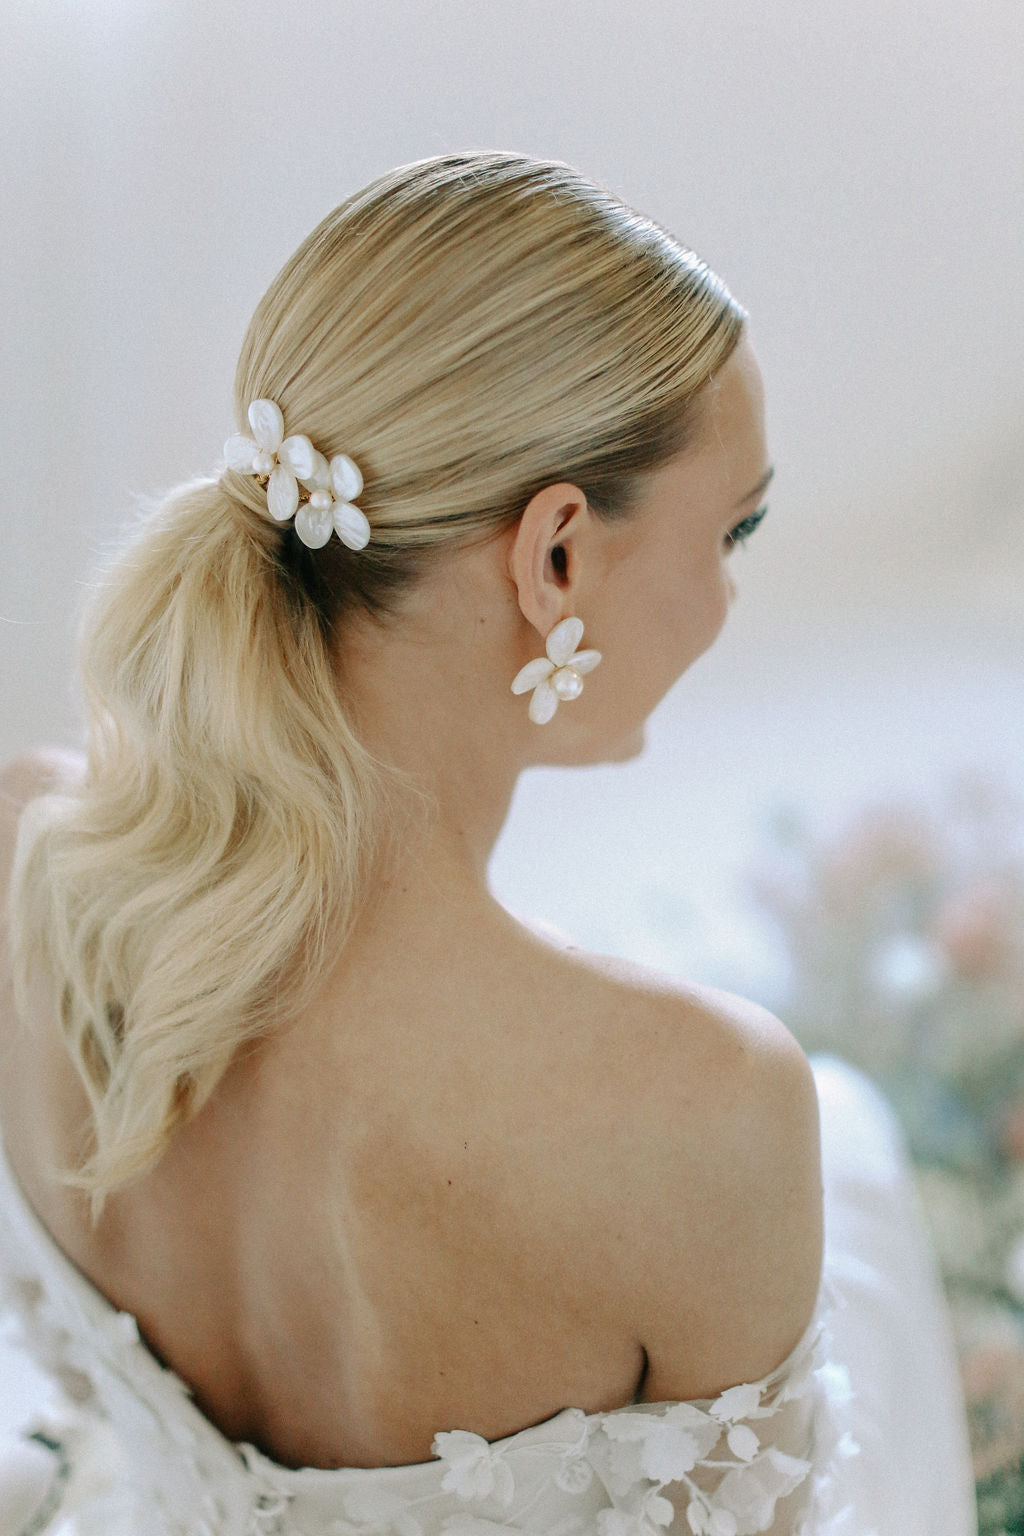 17 Voguish Ponytail Hairstyles For Brides To Try This Wedding Season! |  Stylish ponytail, Messy ponytail hairstyles, Engagement hairstyles